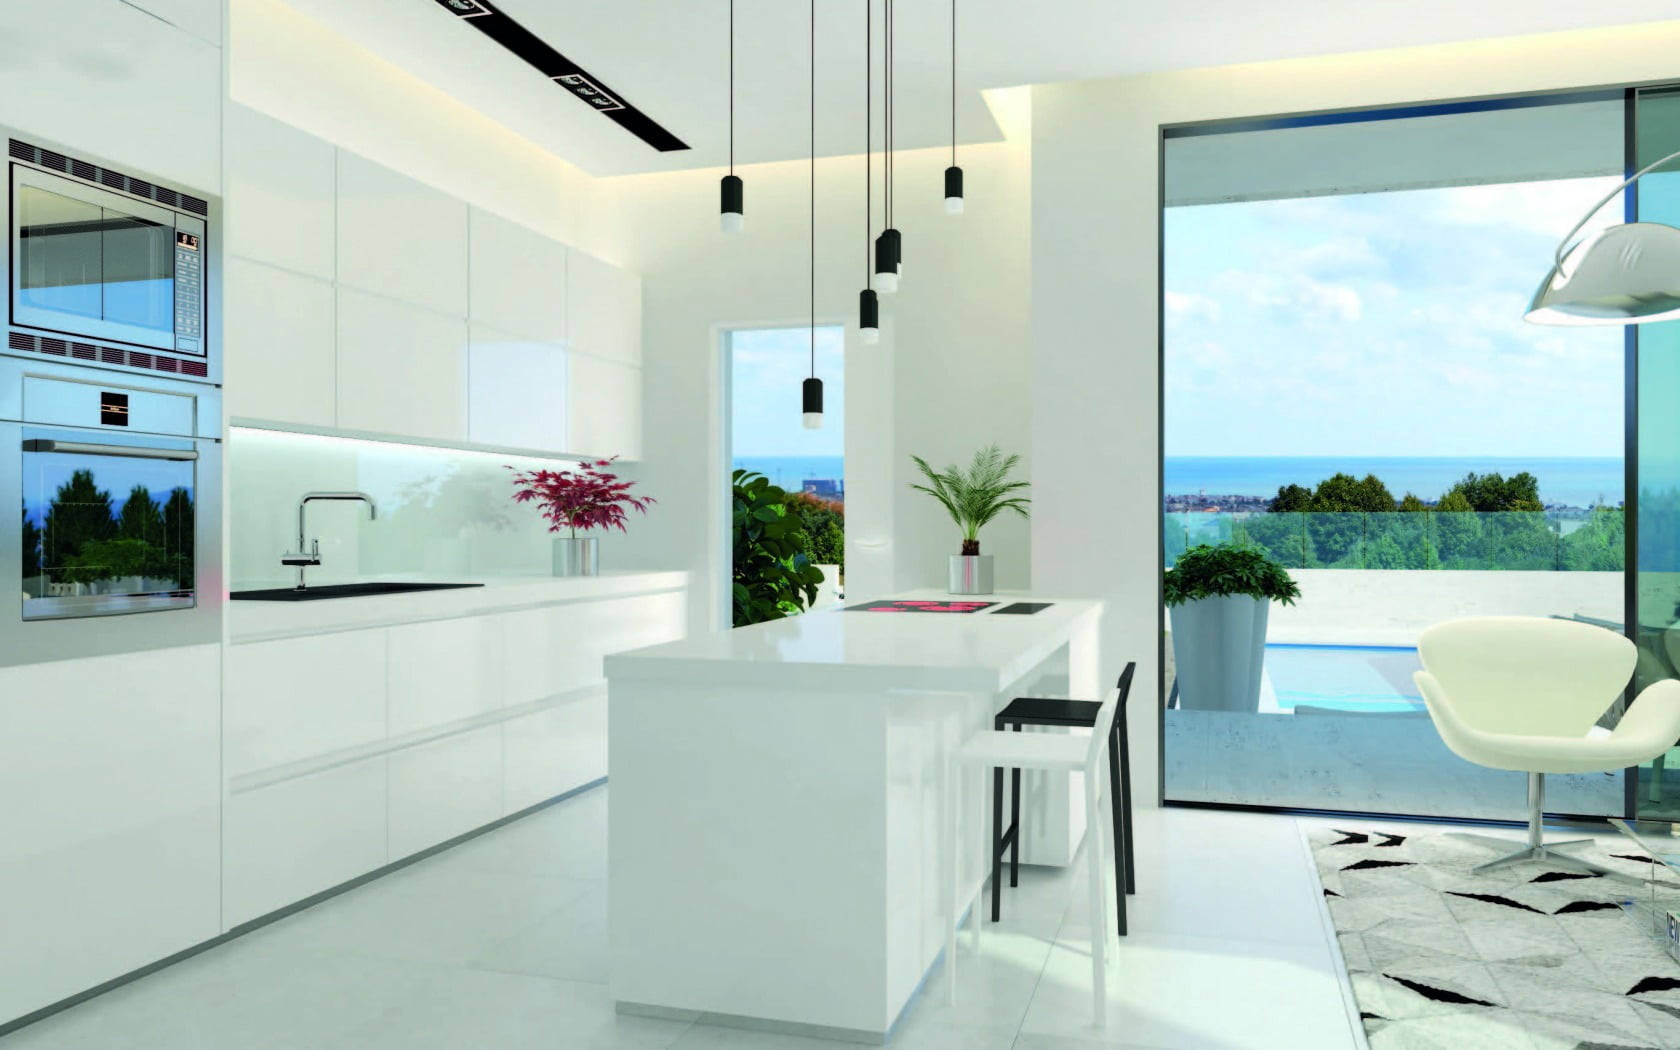 Sleek White Kitchen Design by the Pool Wallpaper